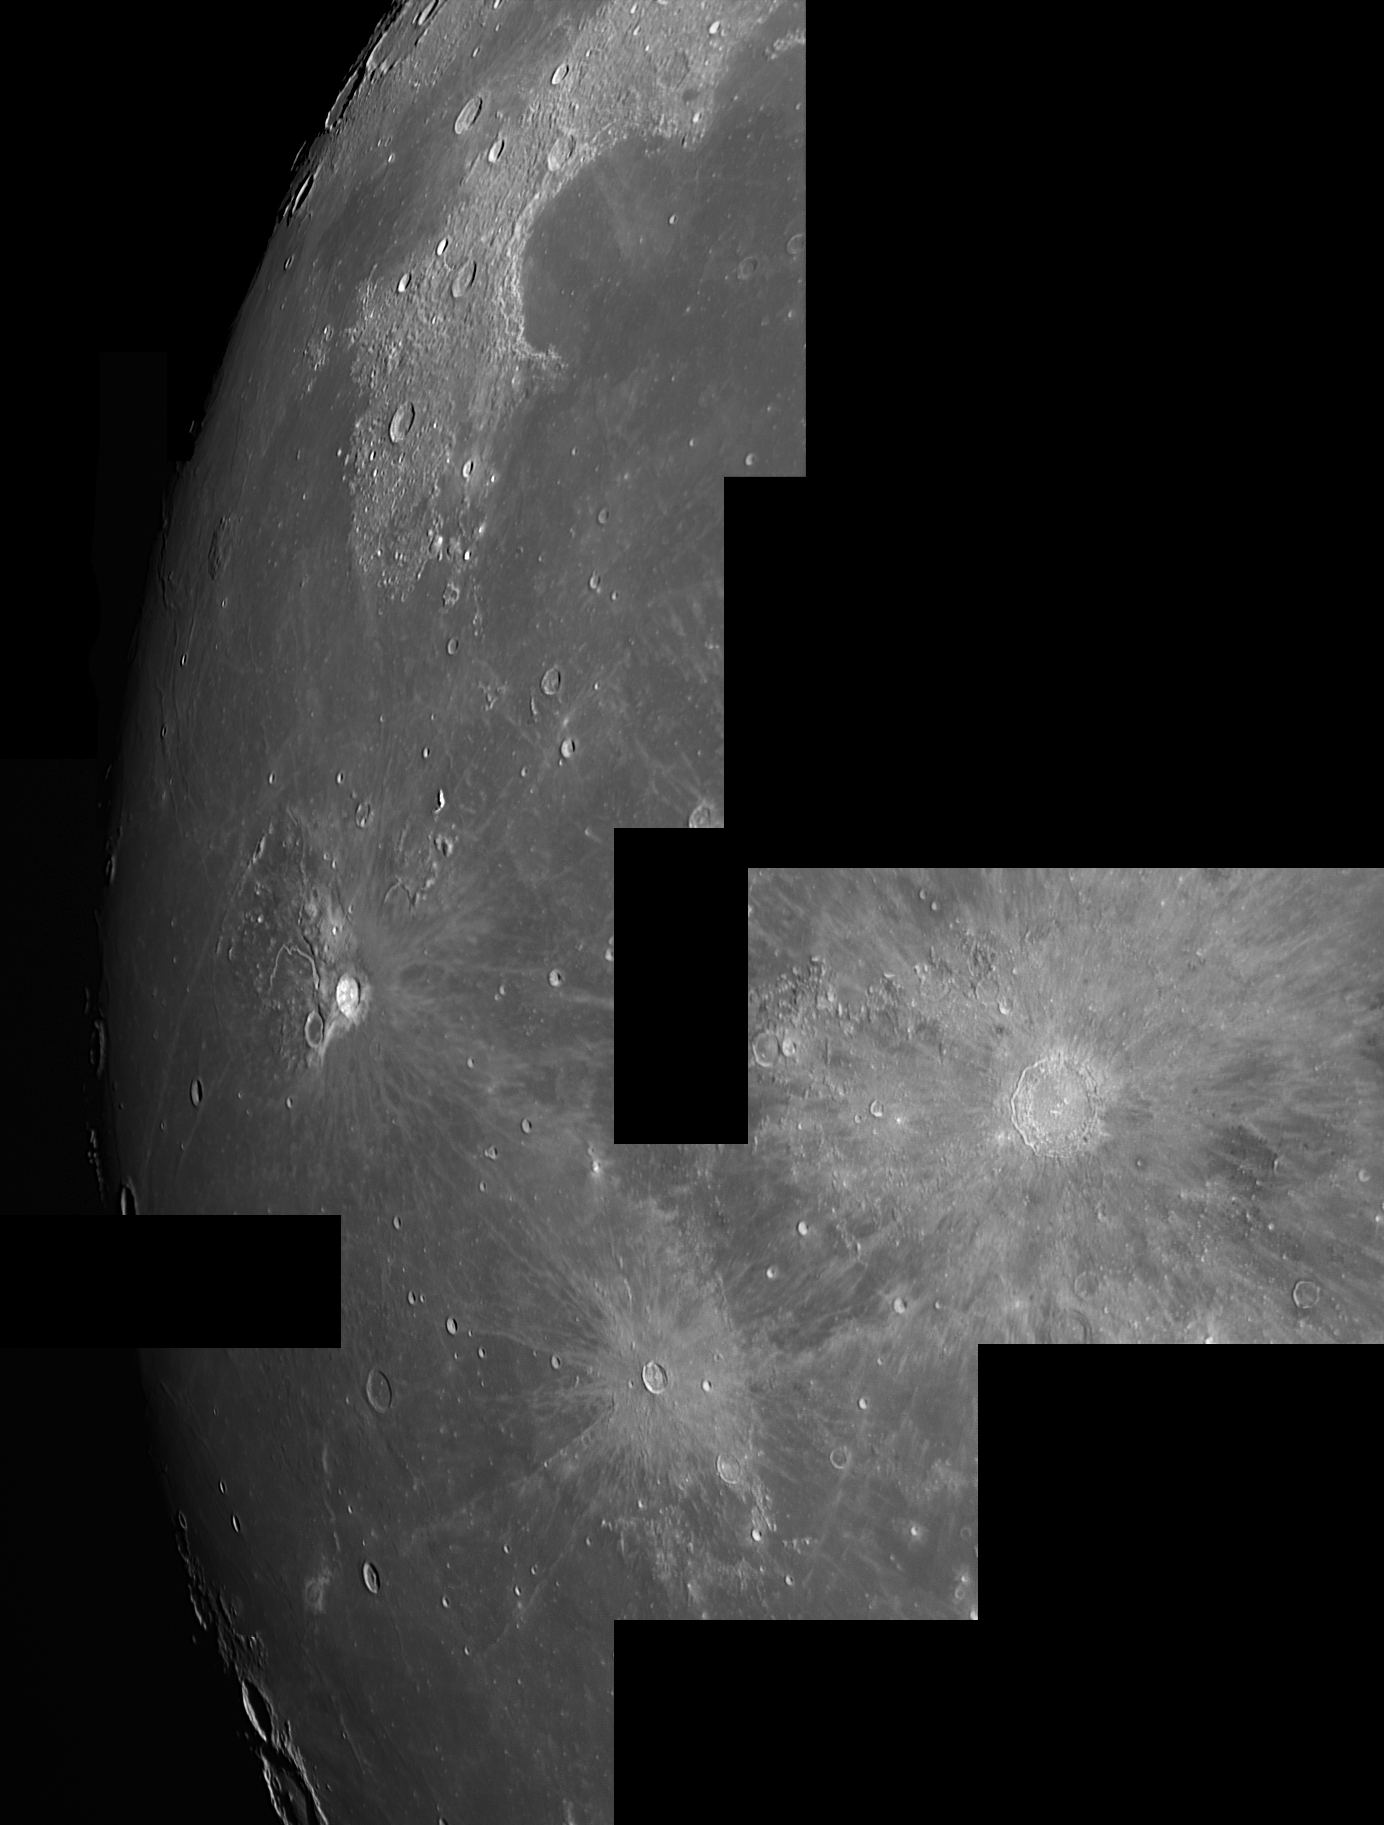 Mosaic Moon (6 images)